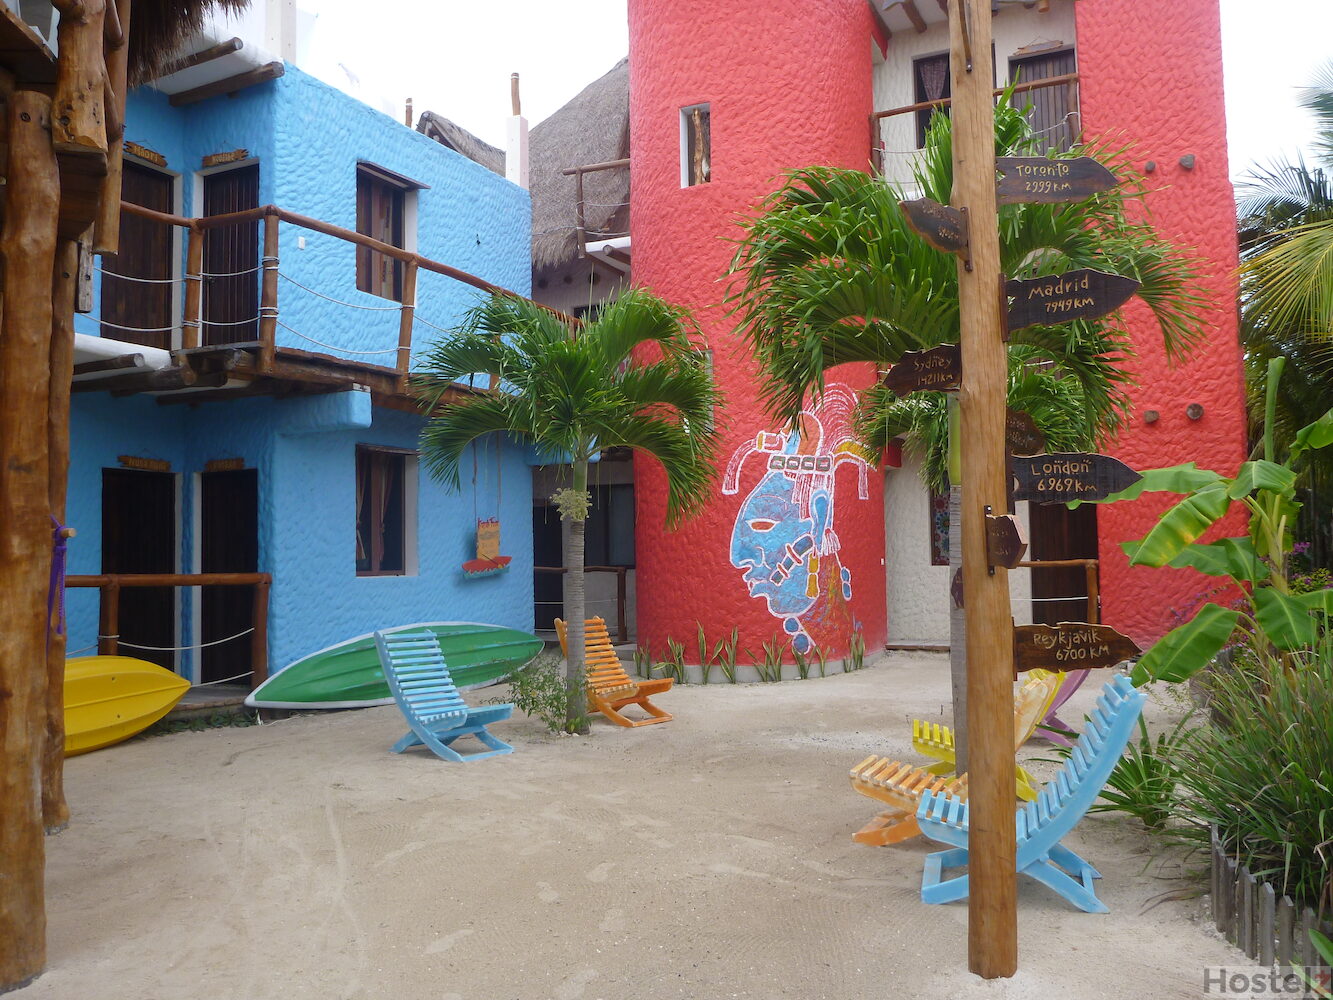 Tribu Hostel, Isla Holbox